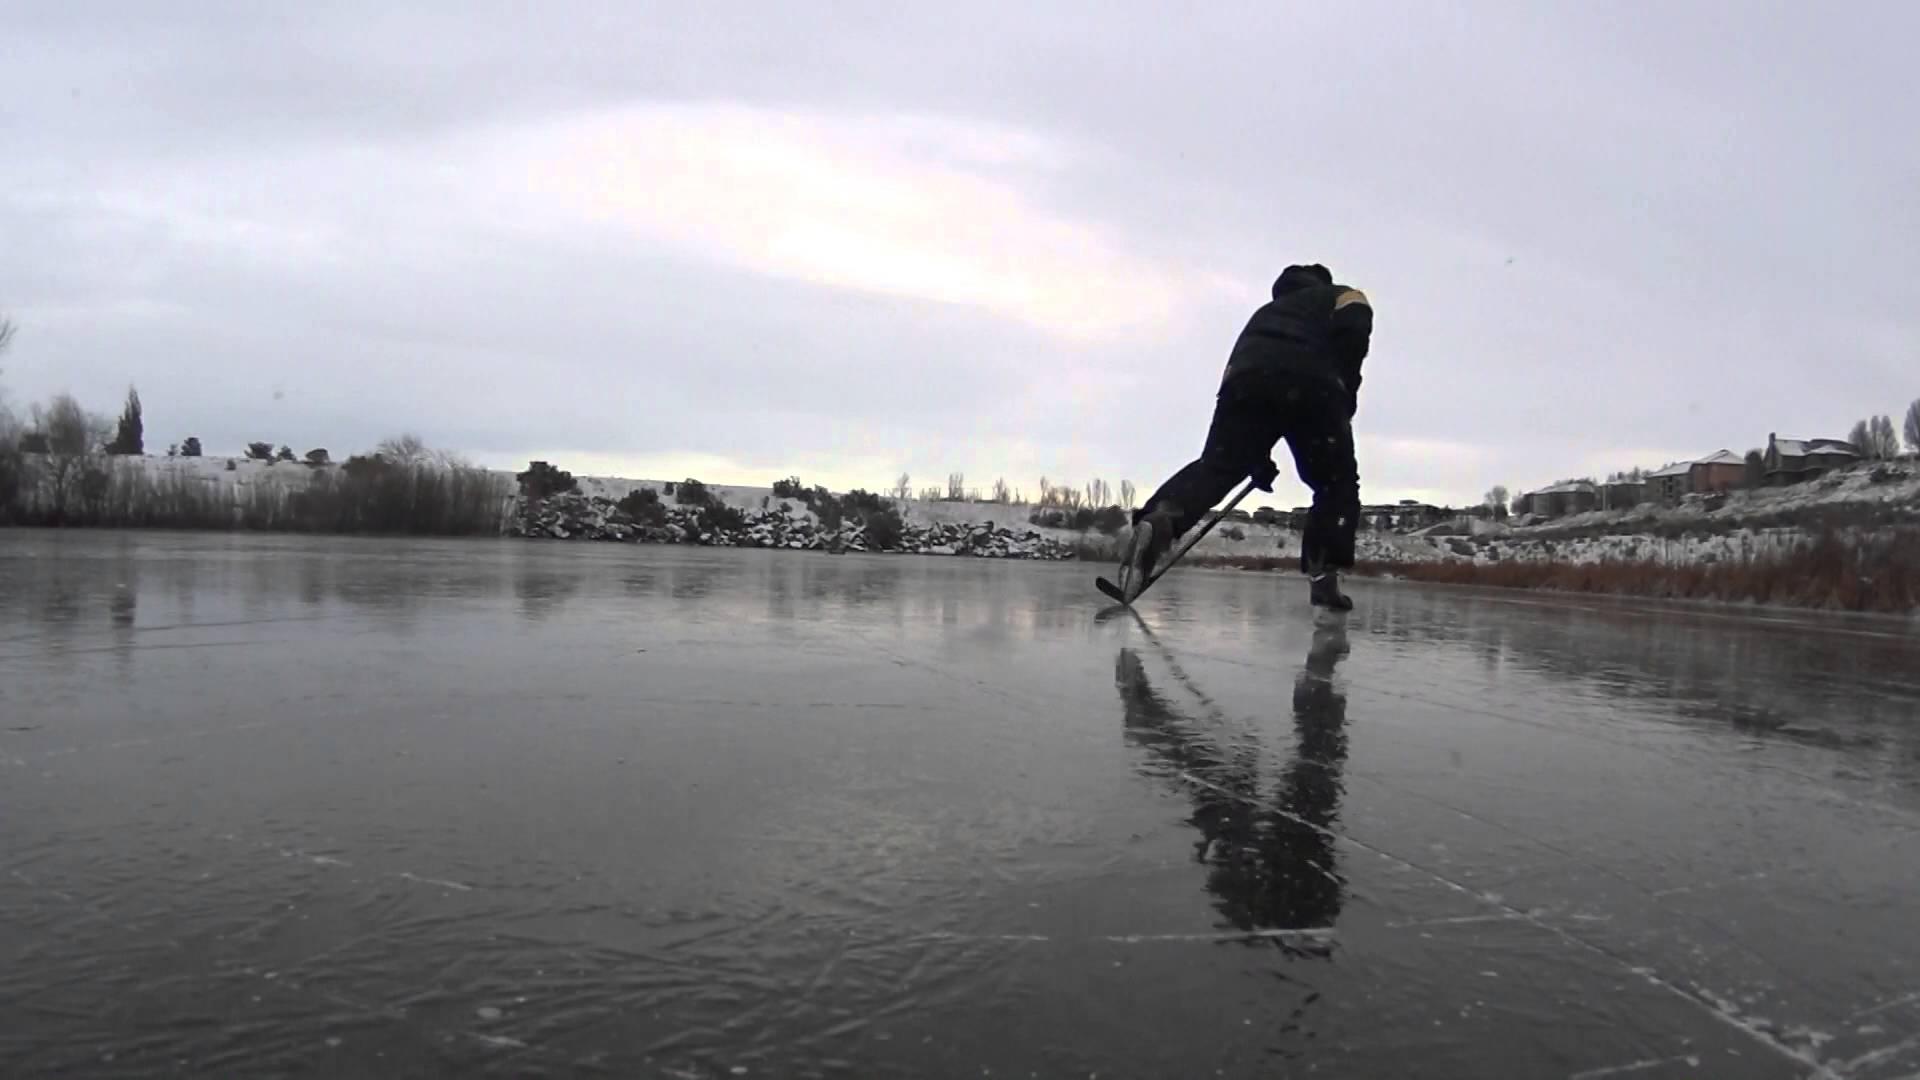 Skating A Frozen Pond In Boise Idaho - YouTube